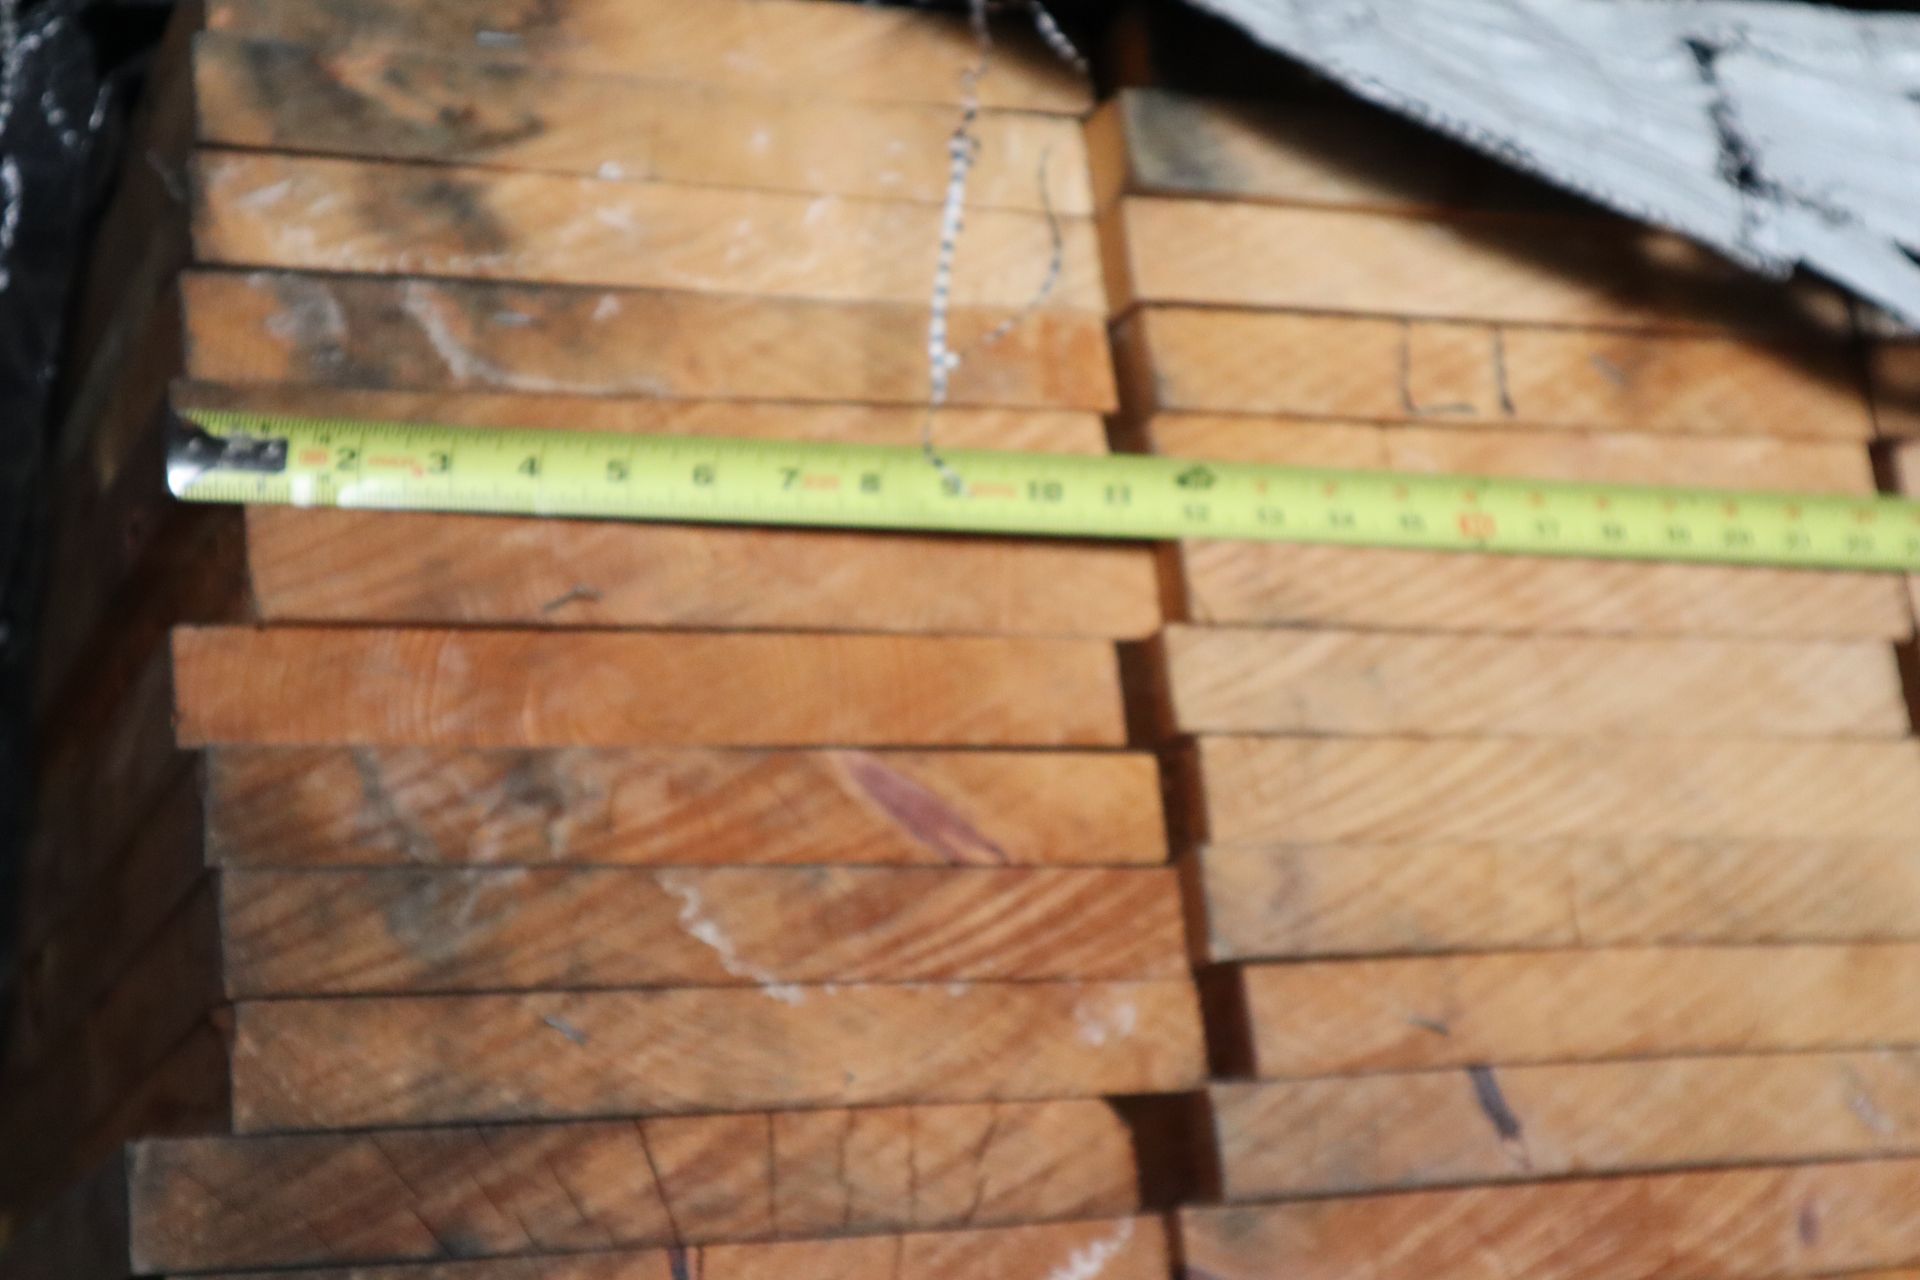 1,360 BFT #2 & Btr Sugar Pine, Kiln Dried, S2S-HV 5/4x12"x16 - Image 4 of 6